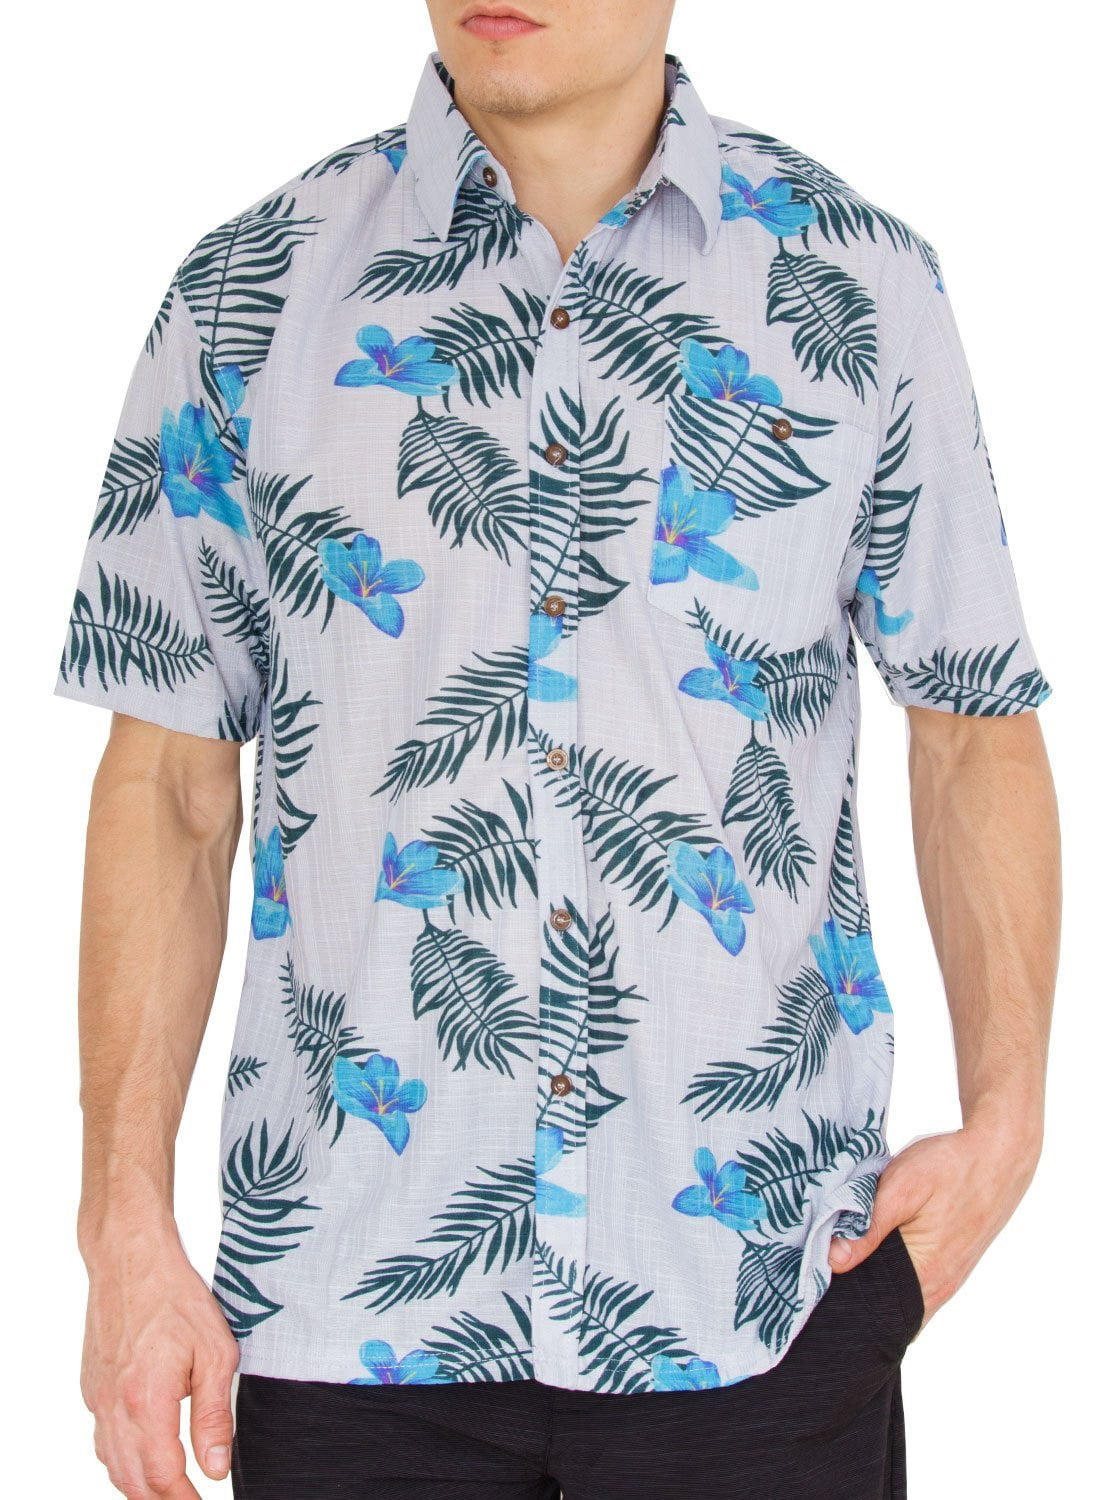 HEFASDM Men Short-Sleeve Floral Printed Fashion Slim Fit Hawaiian Shirts